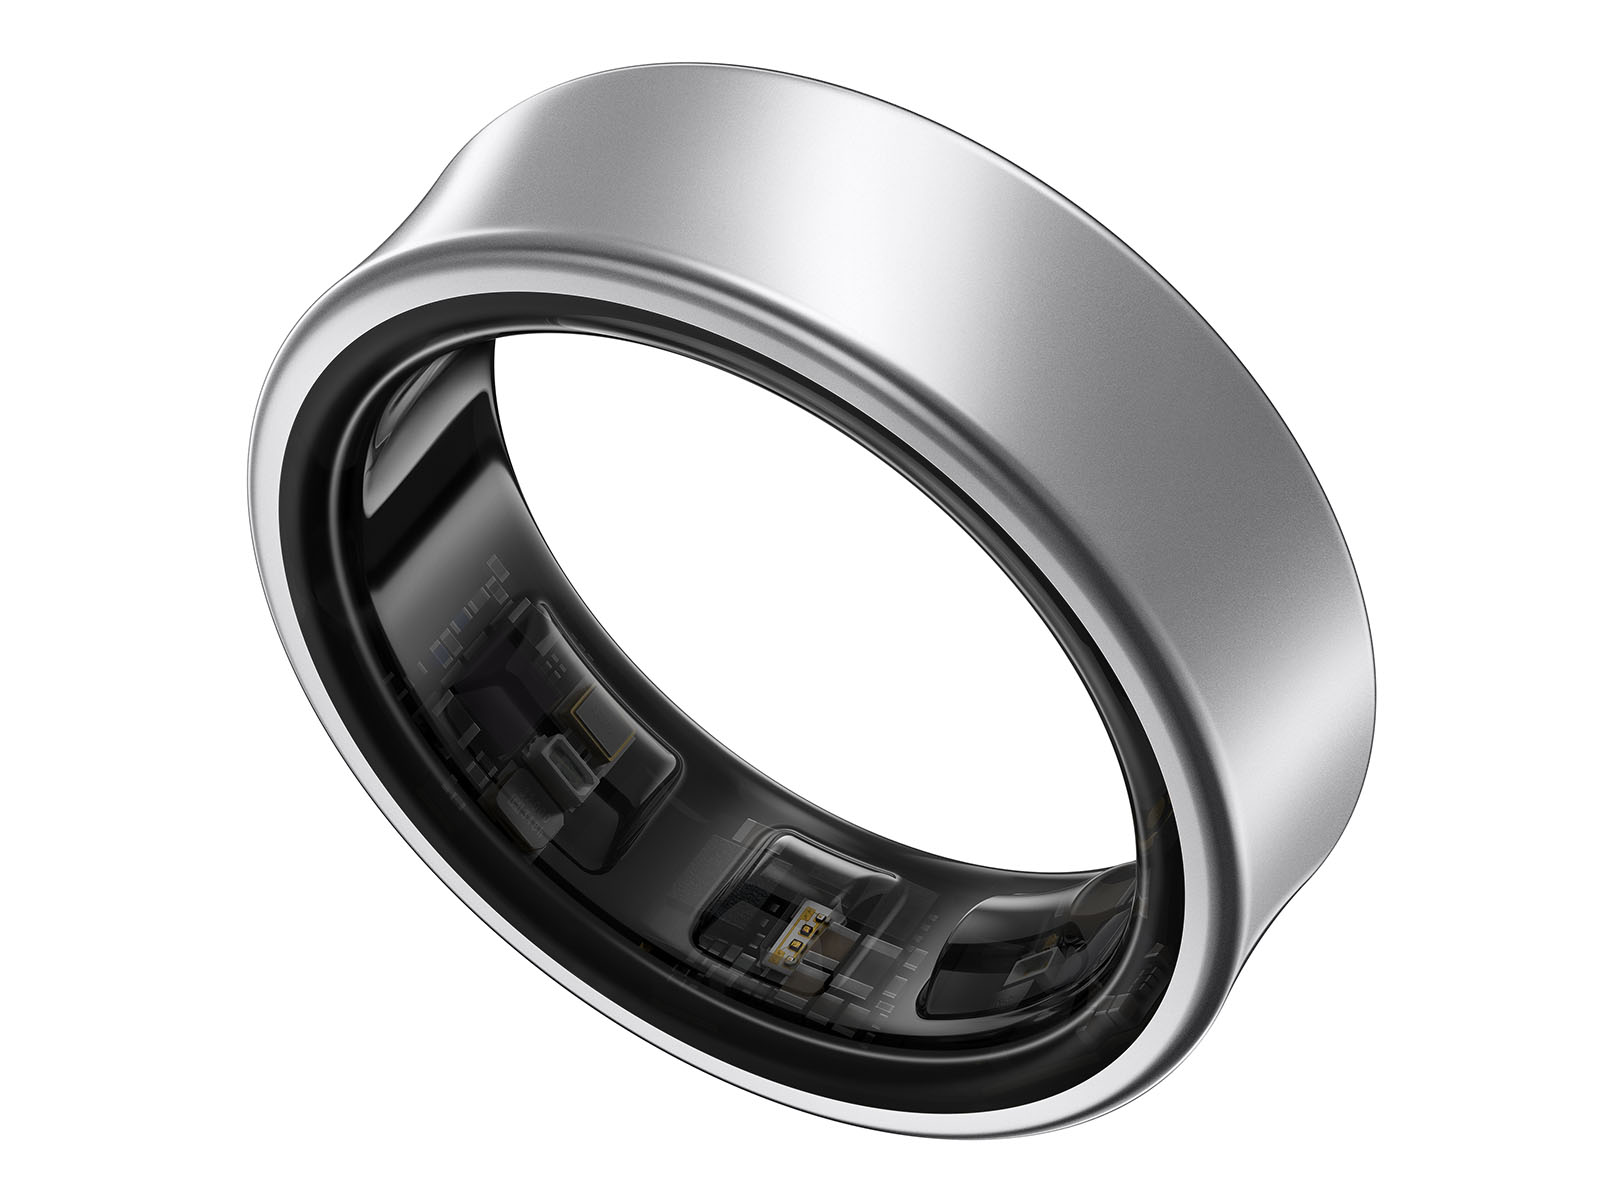 Thumbnail image of Galaxy Ring, Size 11, Titanium Silver